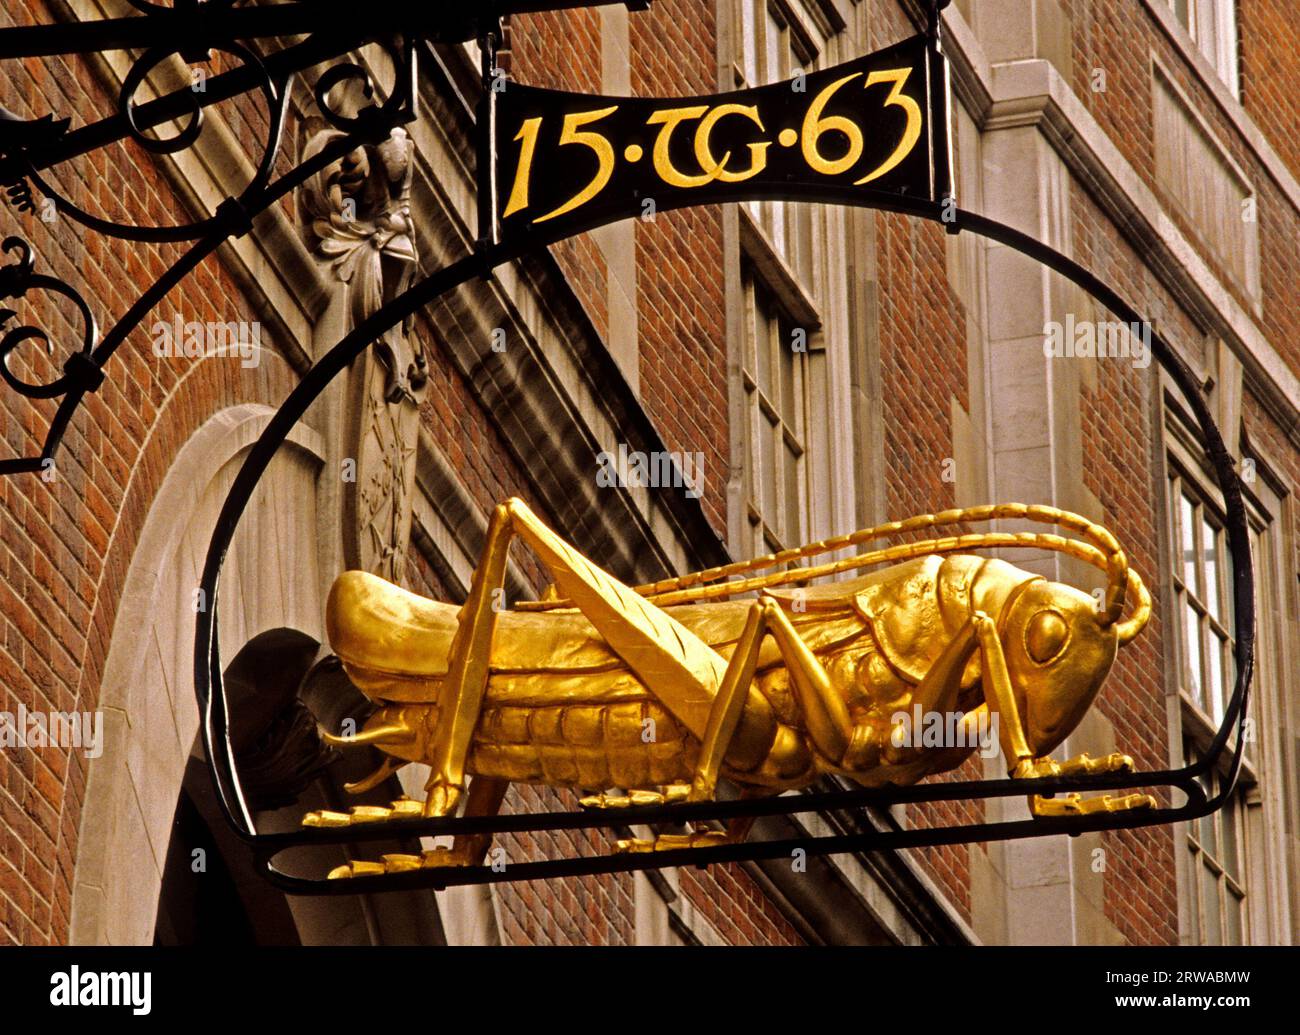 Lombard Street, Martins Bank sign, grasshopper, signs, London, England Stock Photo